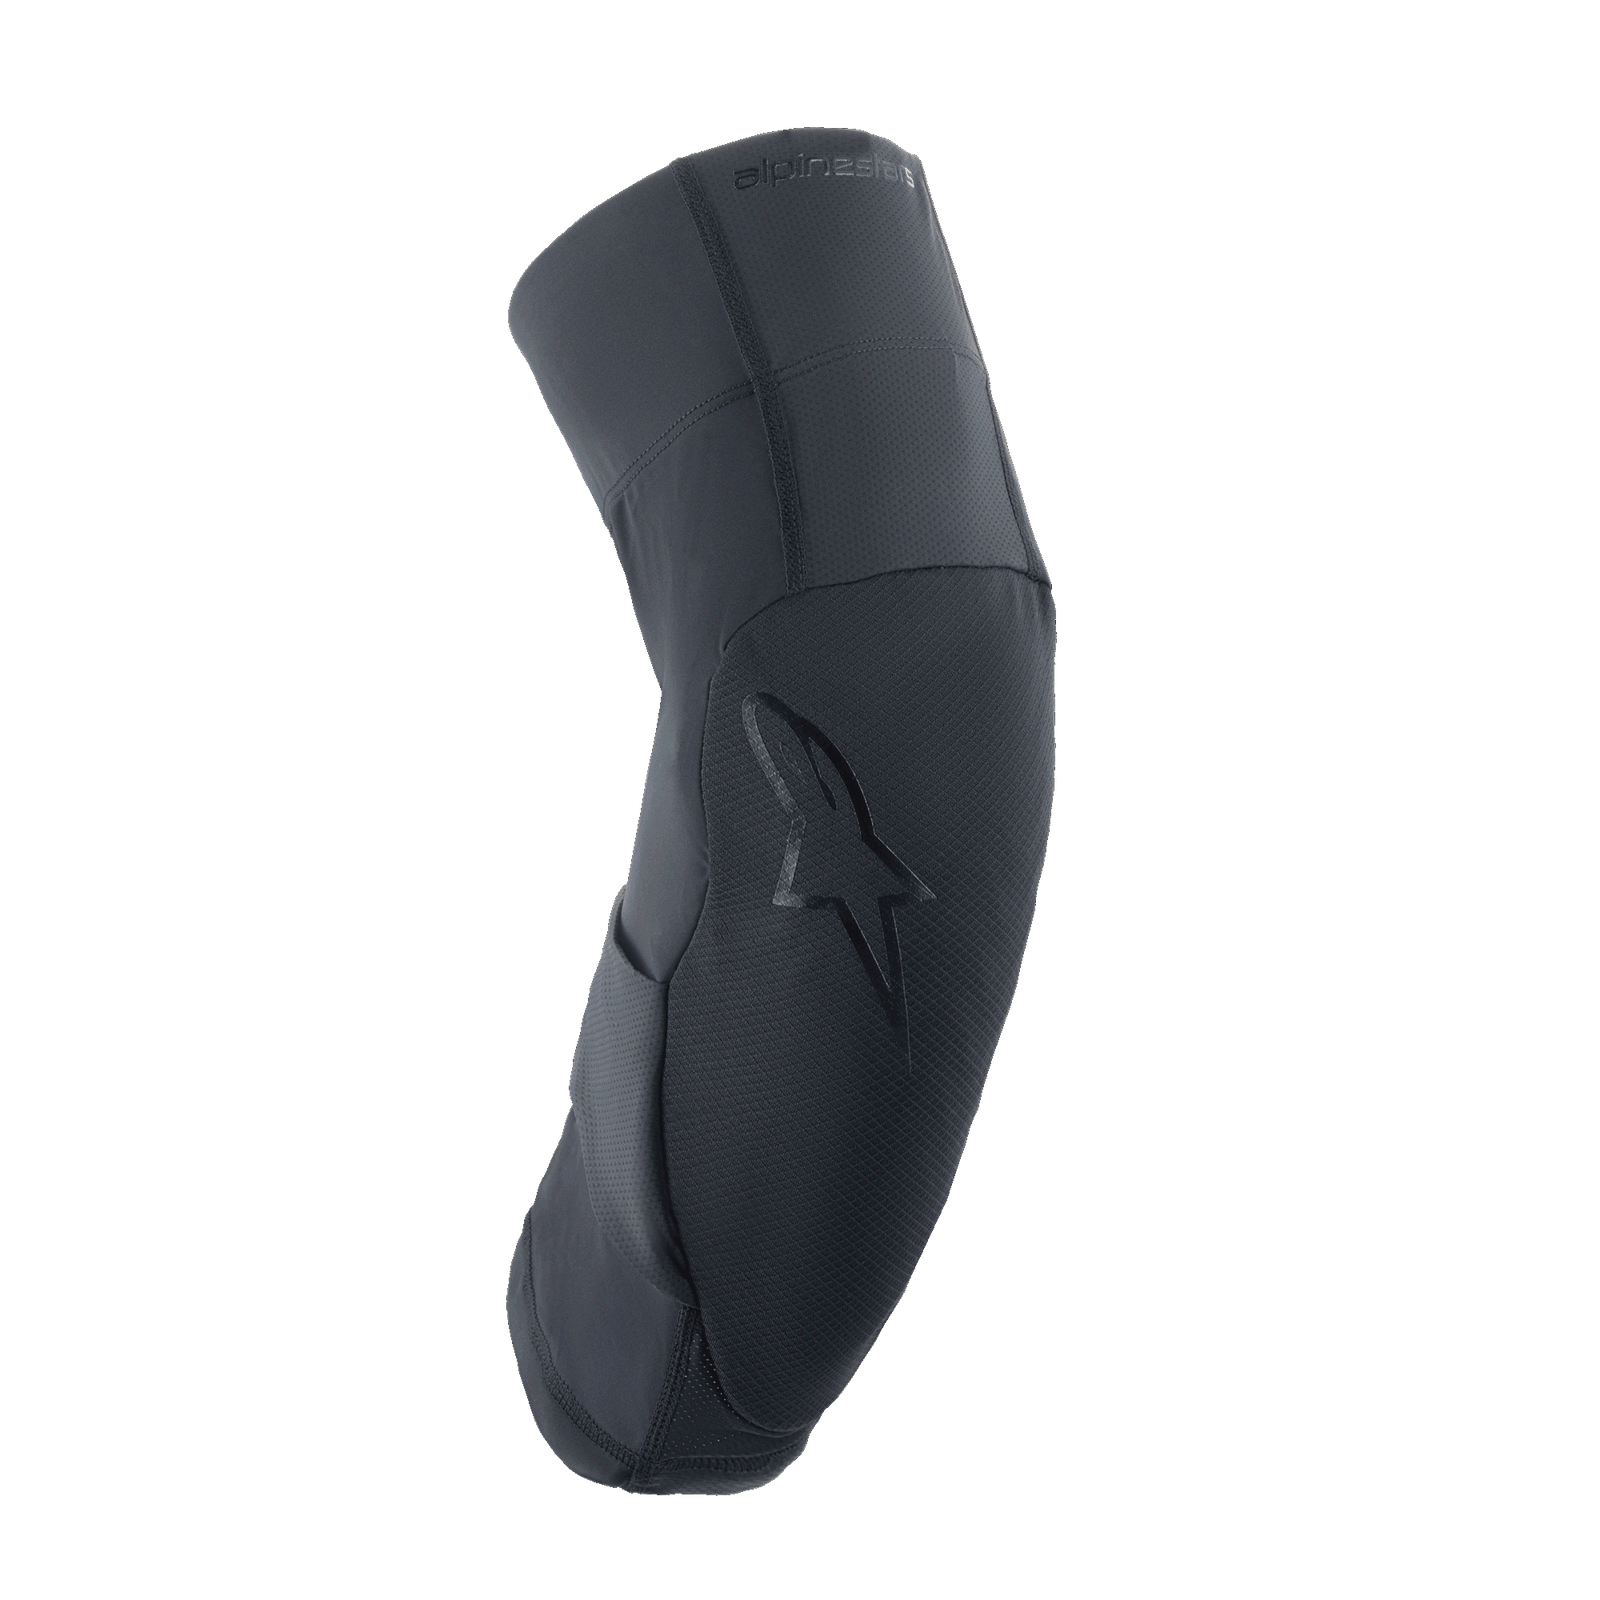 A-Motion Plasma Pro Knee Protector